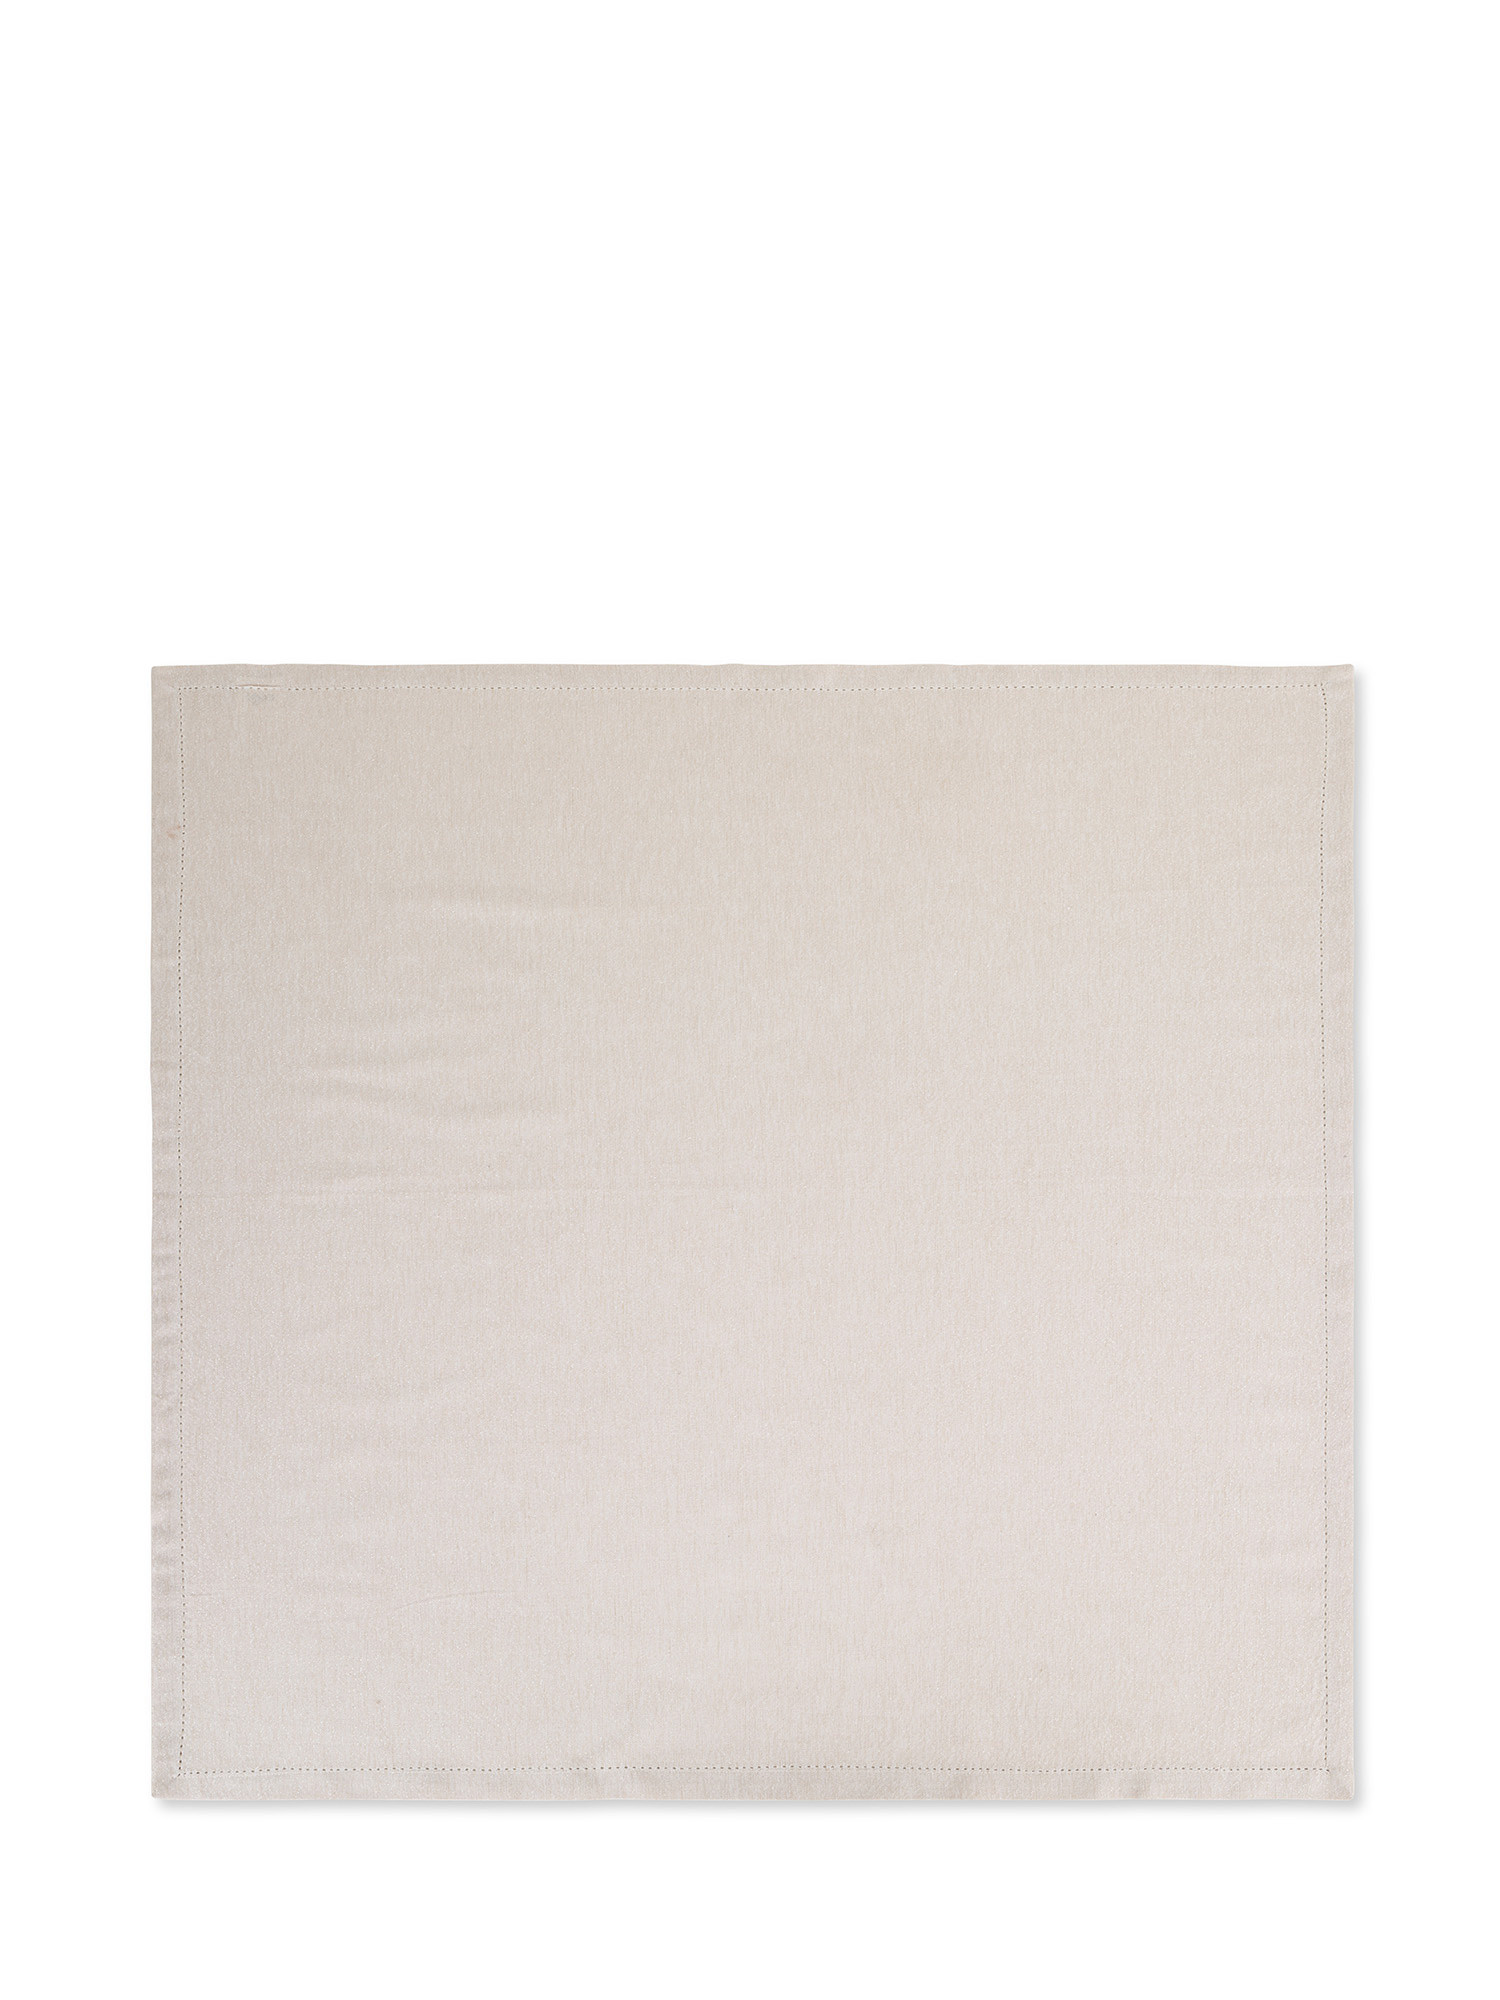 Centrotavola cotone tinta unita con fili lurex, Beige chiaro, large image number 0